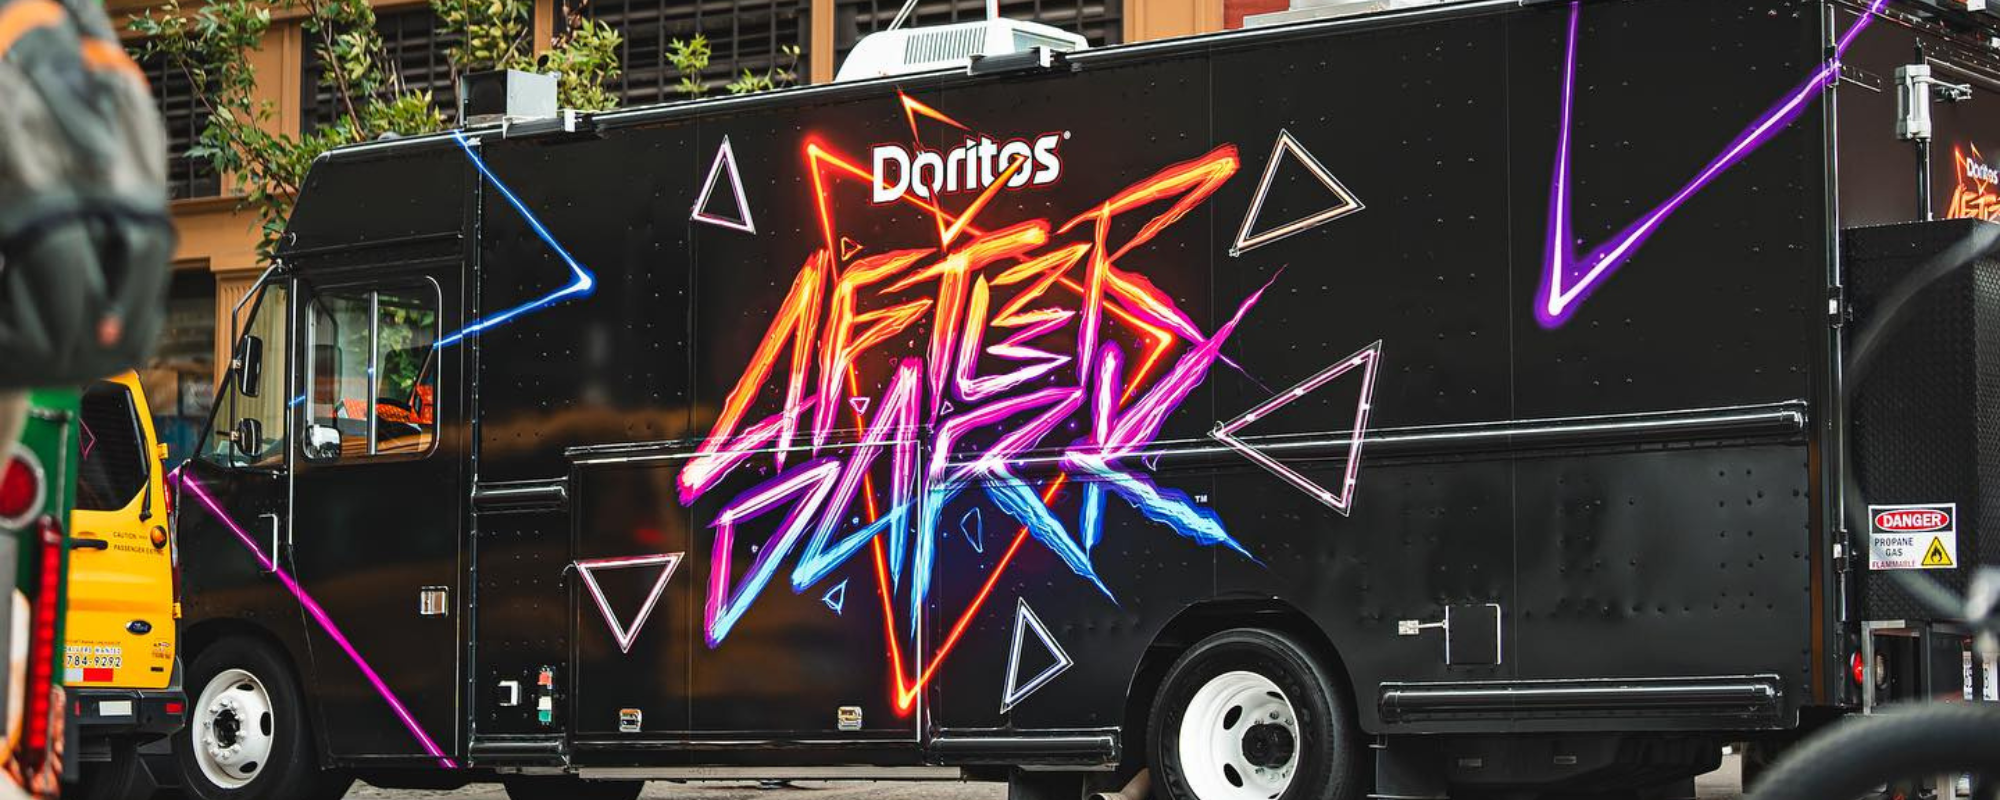 Doritos food truck on NYC street